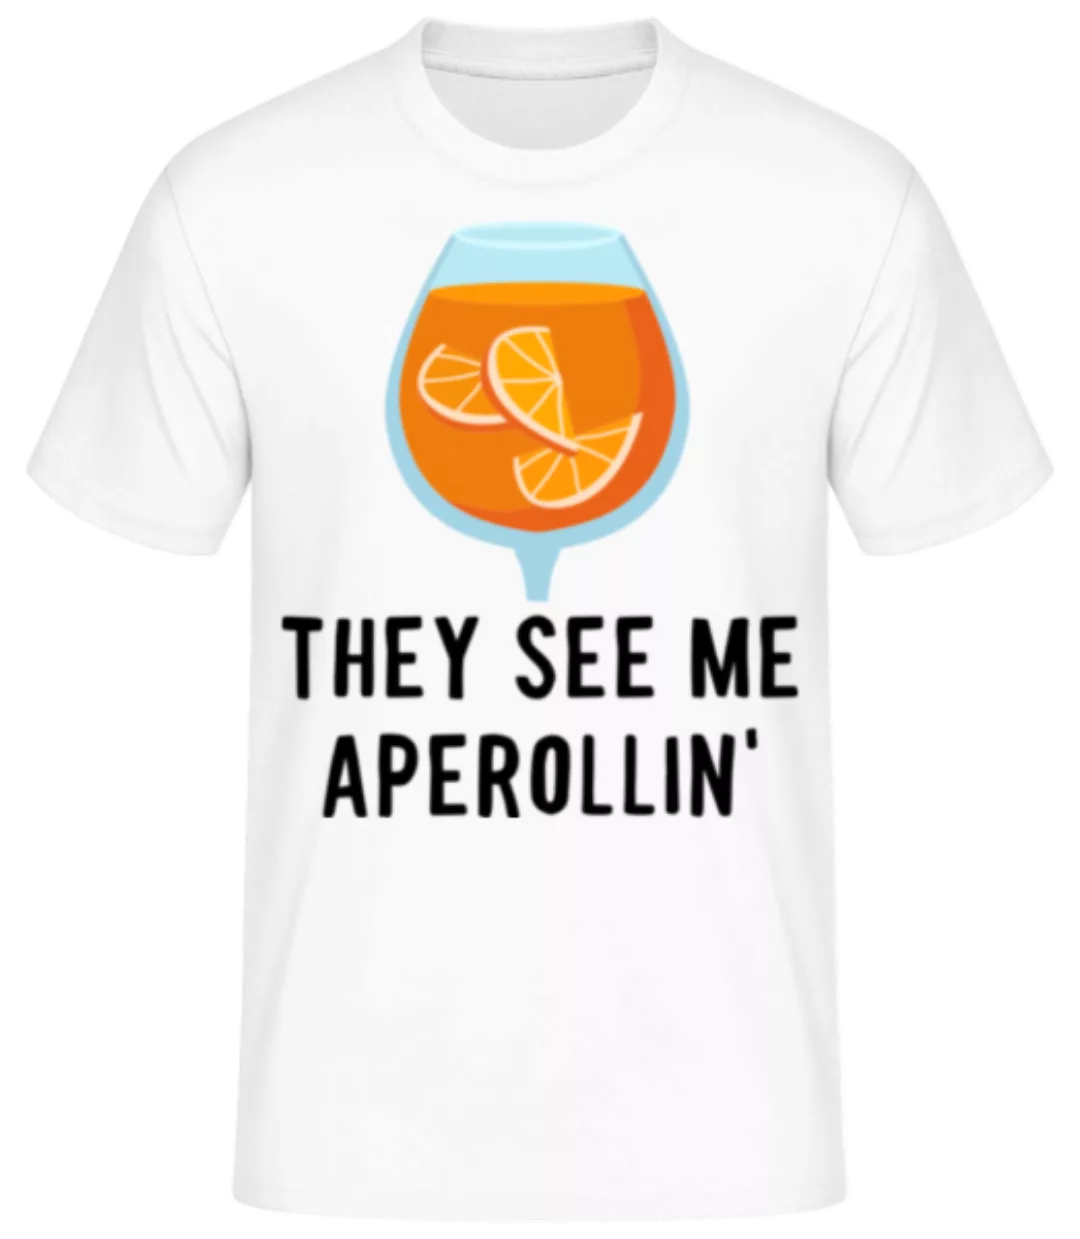 They see me Aperollin' · Männer Basic T-Shirt günstig online kaufen